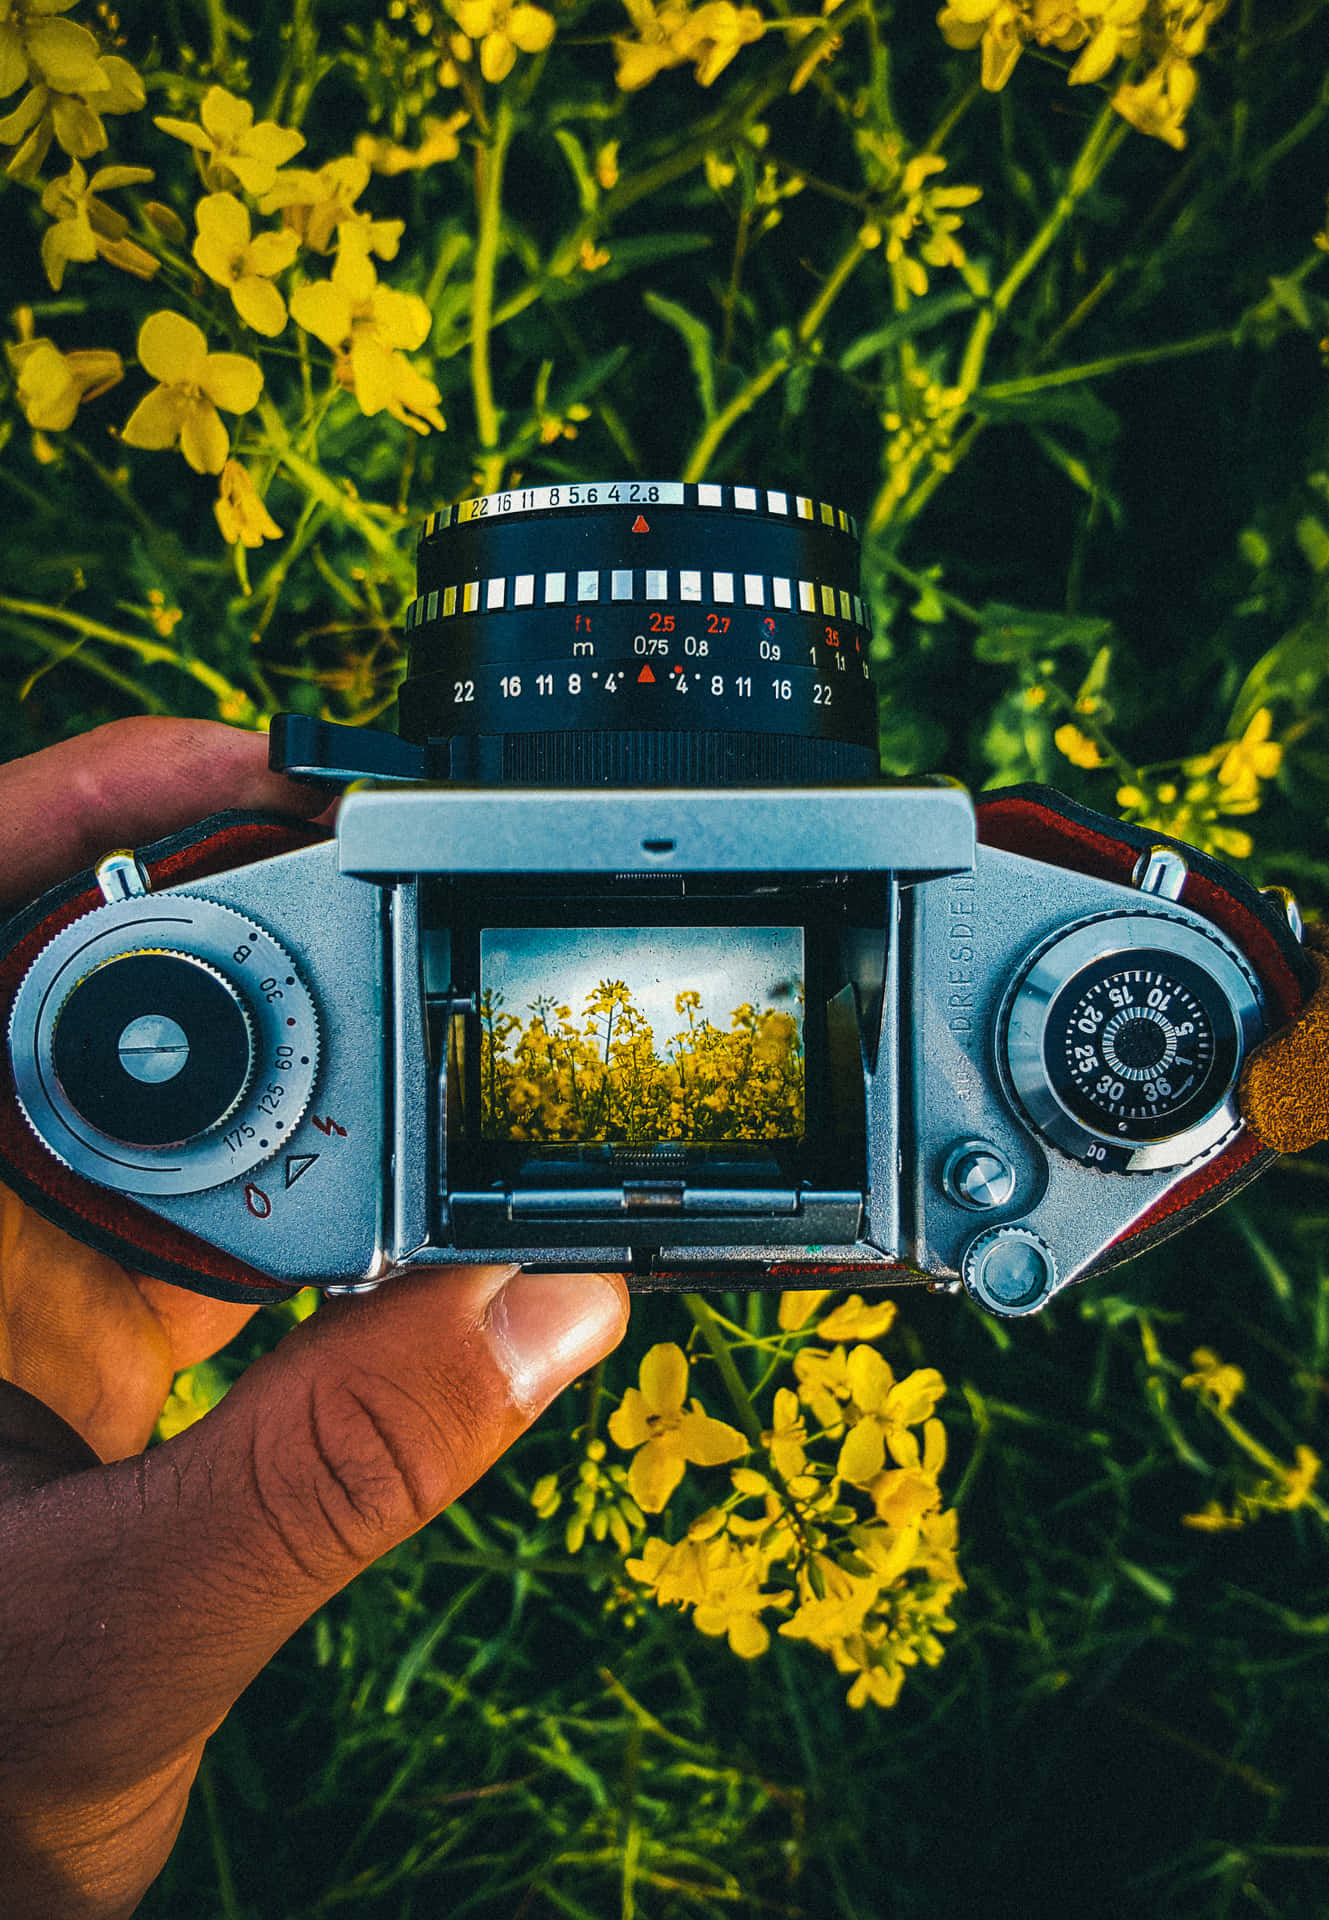 Enjoy taking high-quality shots with a simple Digital SLR Camera